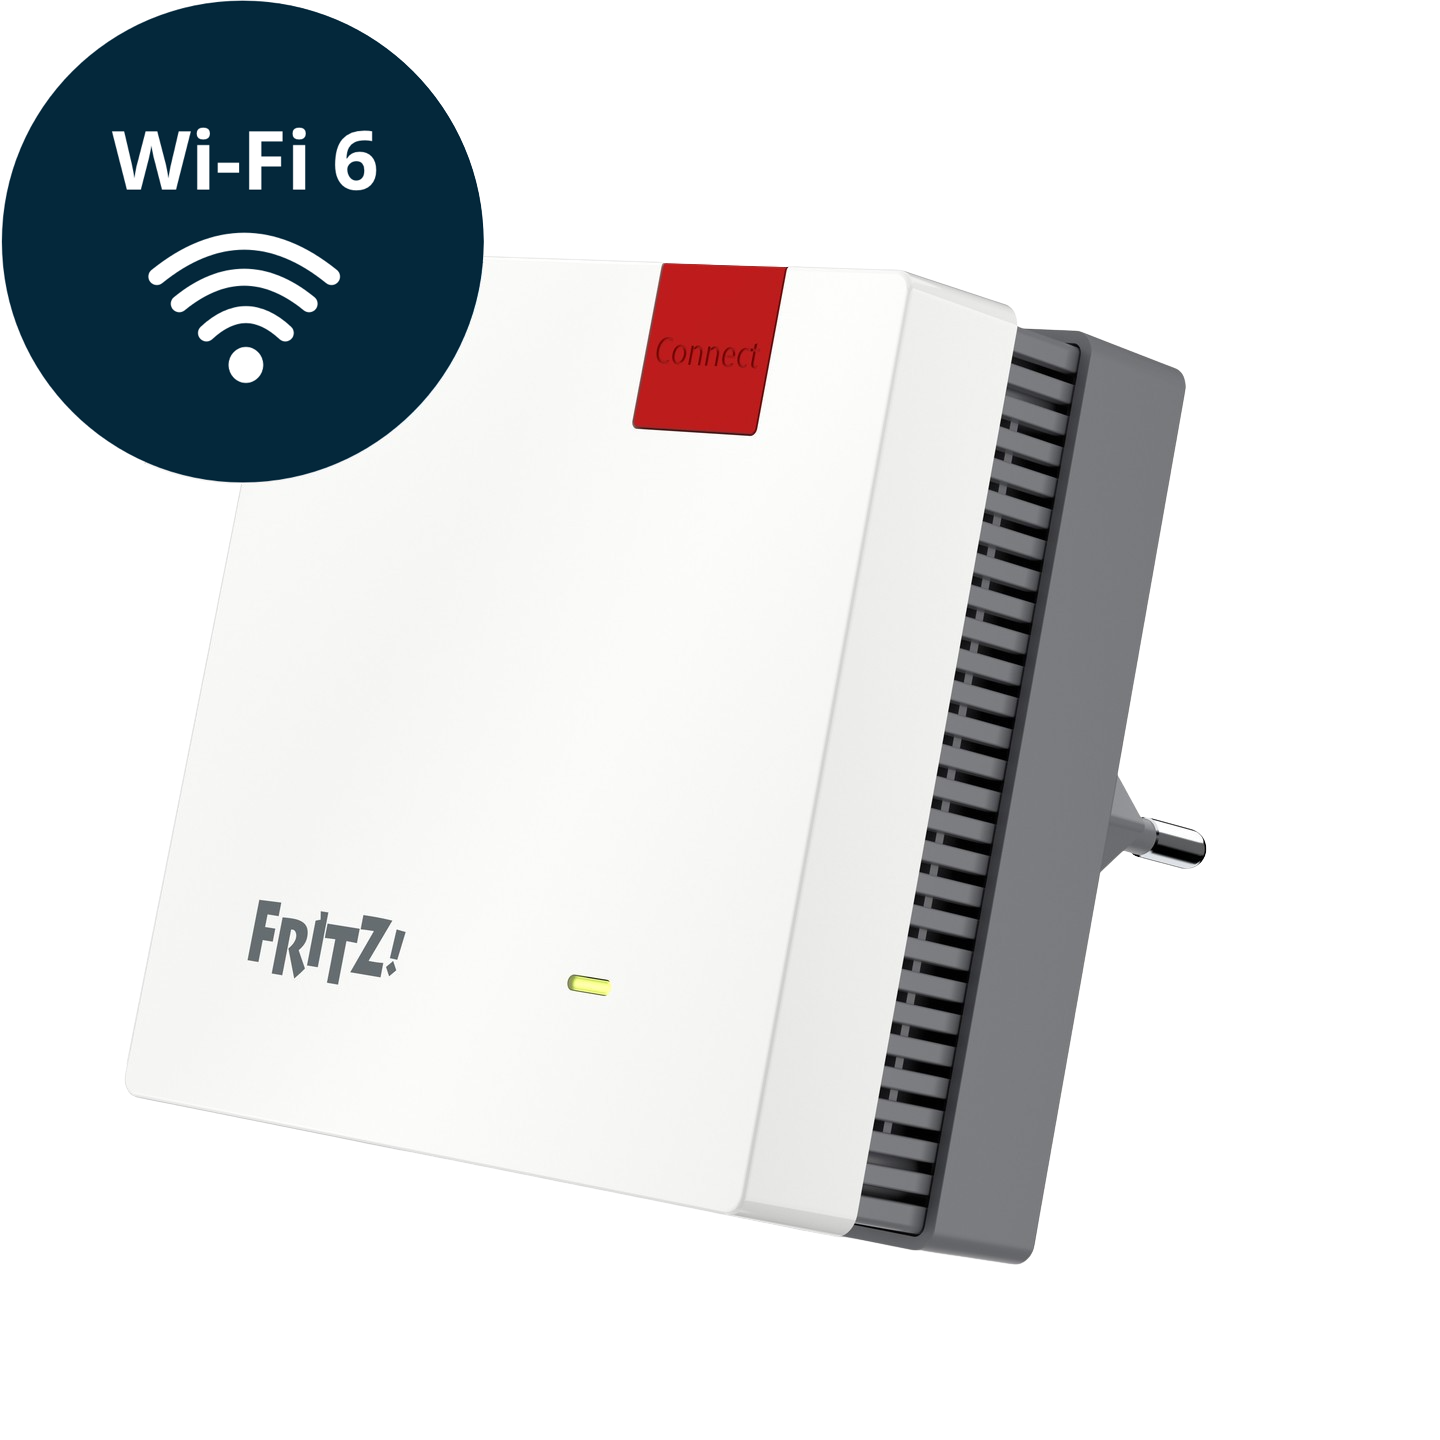 FRITZ!Box 7530 AX modem/router